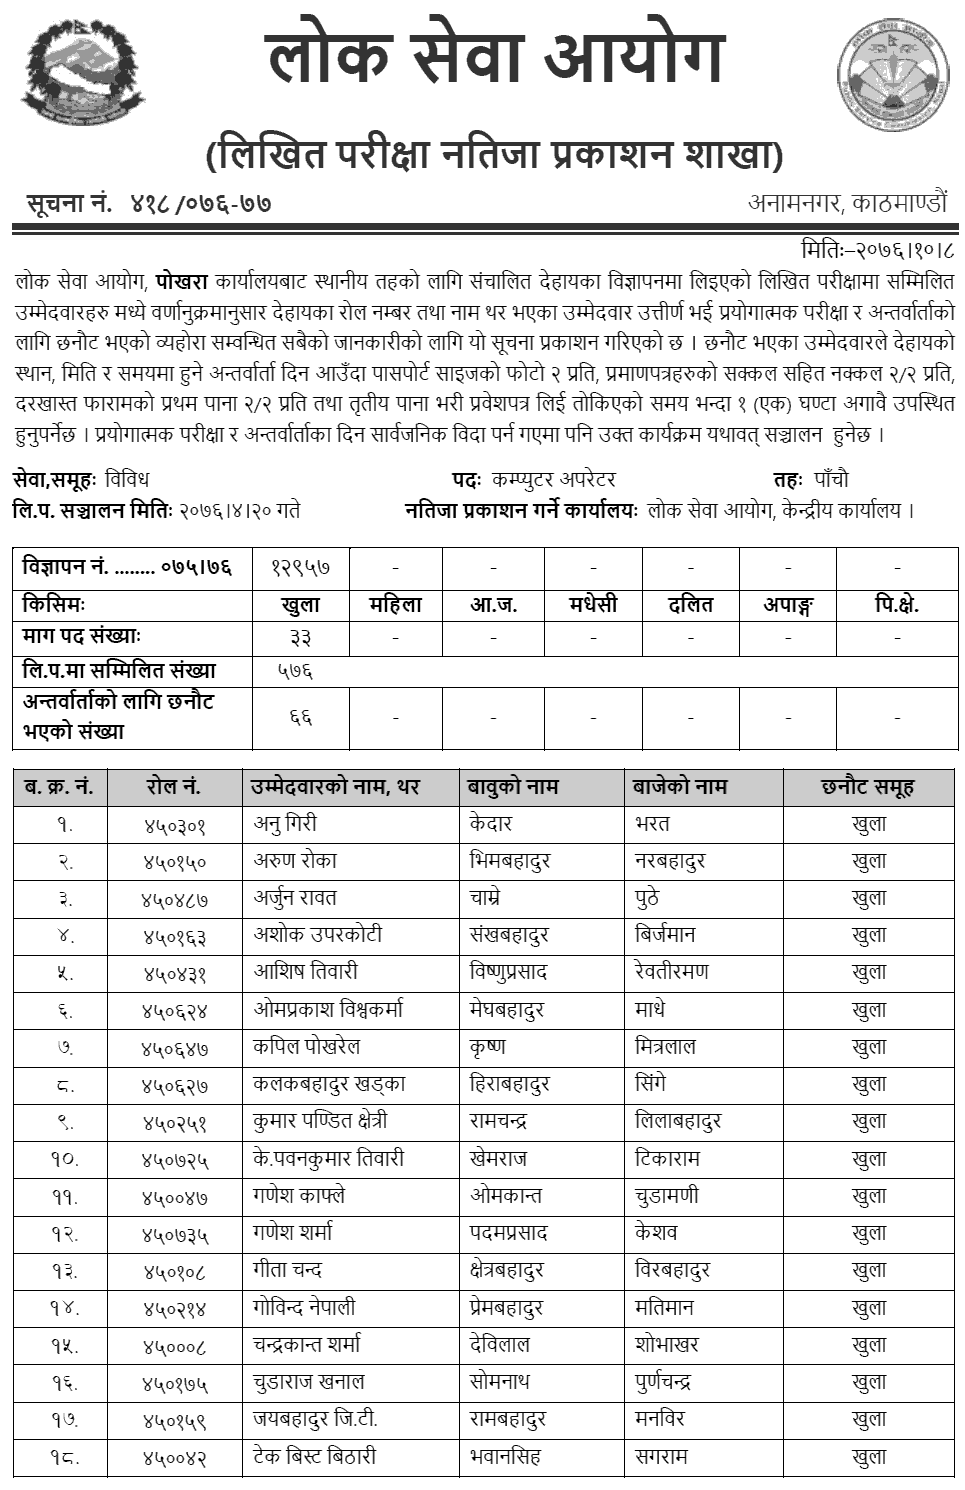 Lok Sewa Aayog Pokhara Local Level 5th Computer Operator Written Exam Result